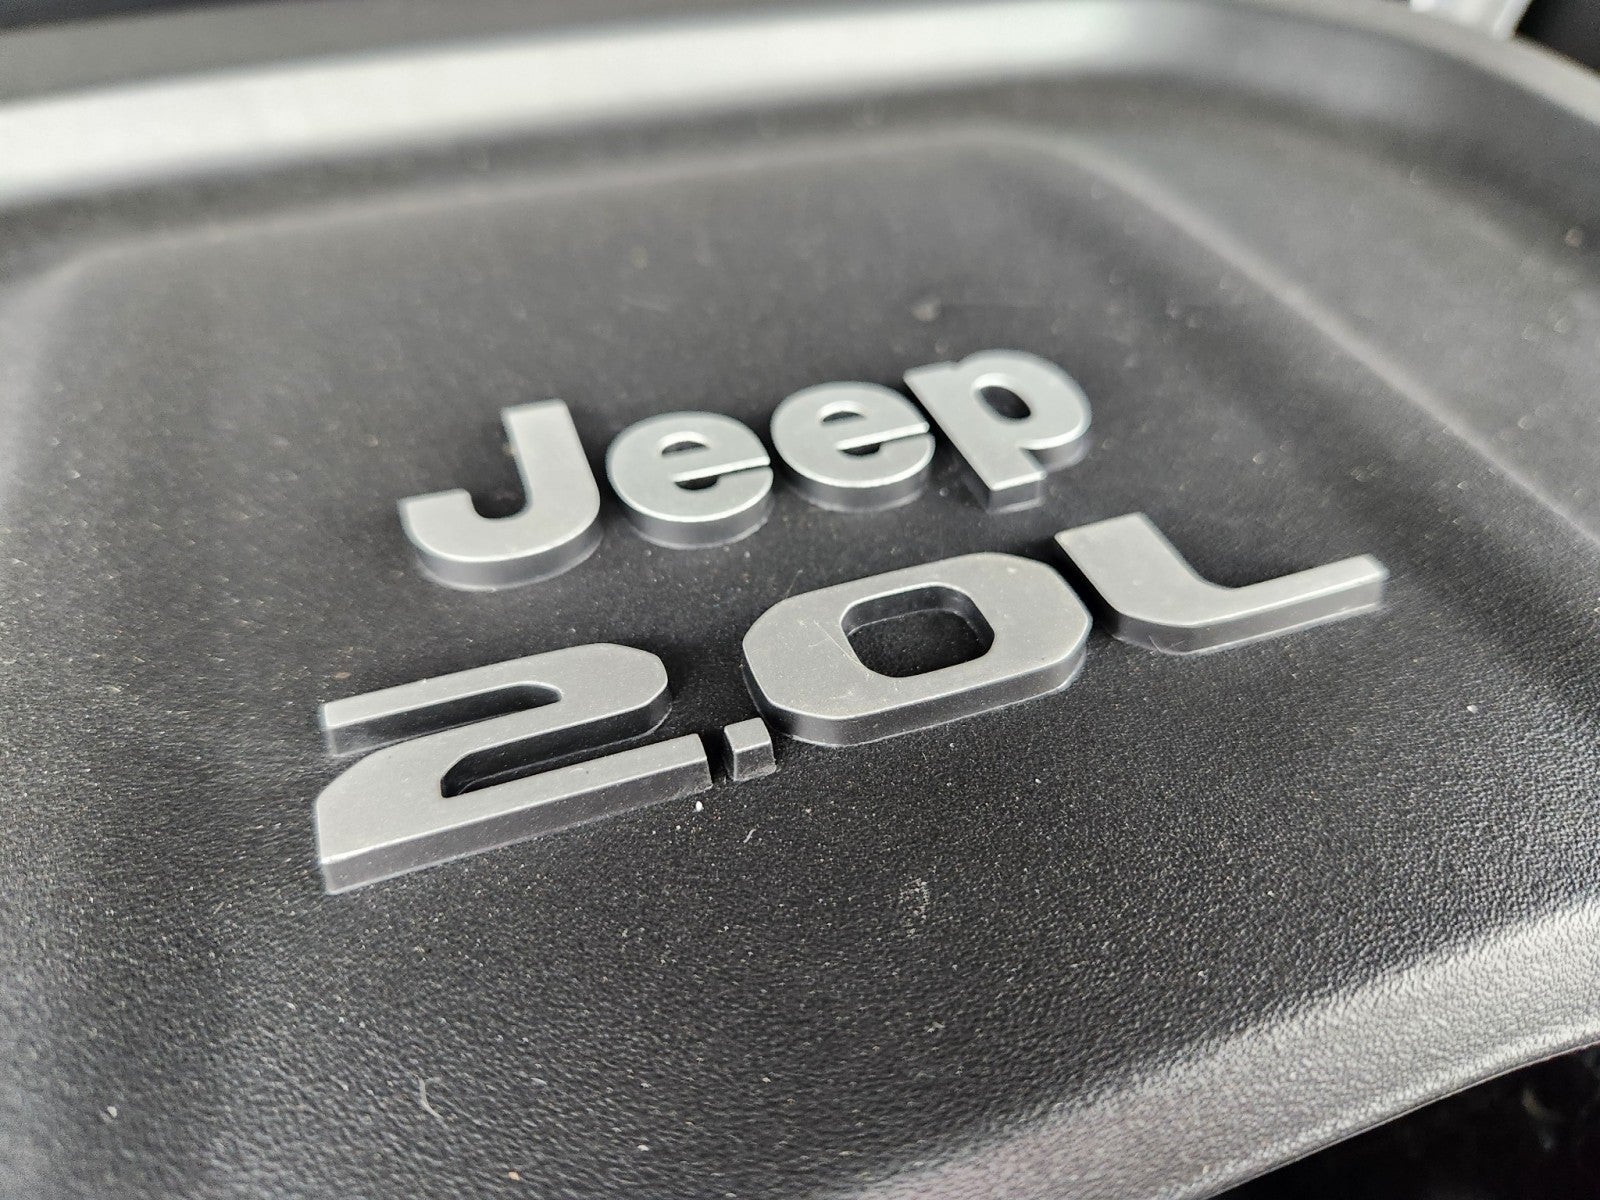 2020 Jeep Wrangler Sport